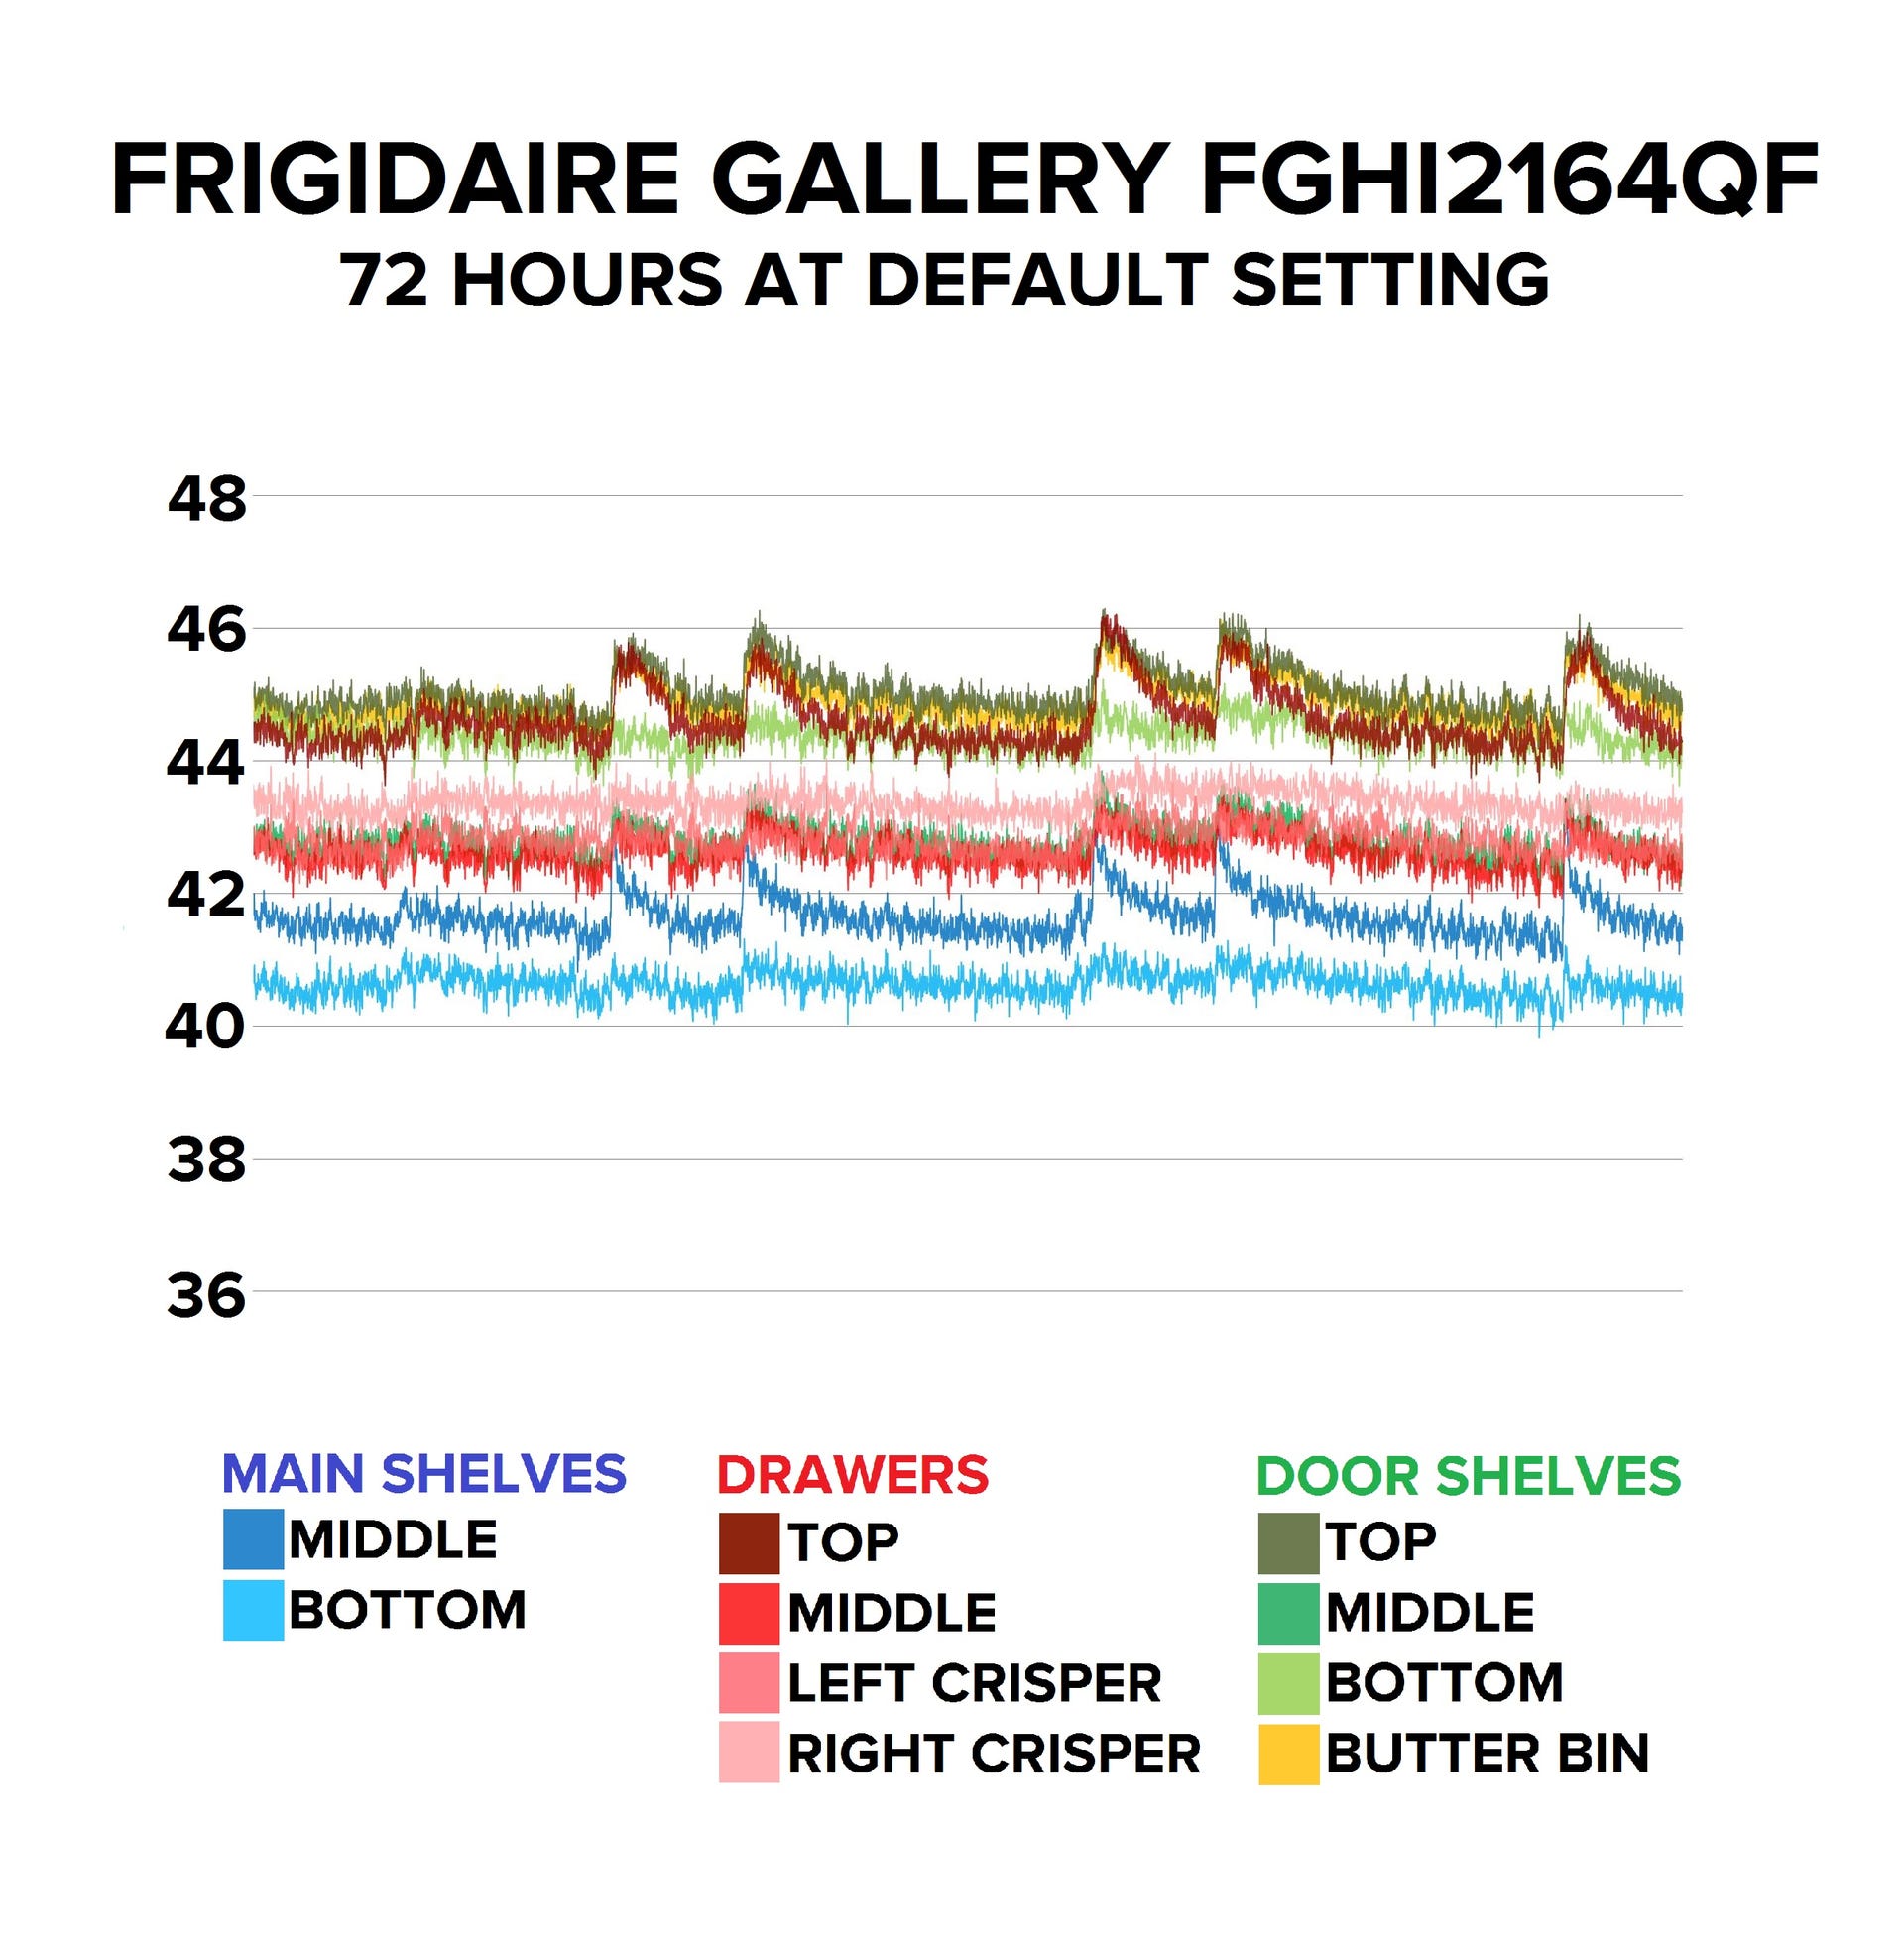 frigidaire-gallery-fghi2164qf-top-freezer-refrigerator-default-temp-graph.jpg